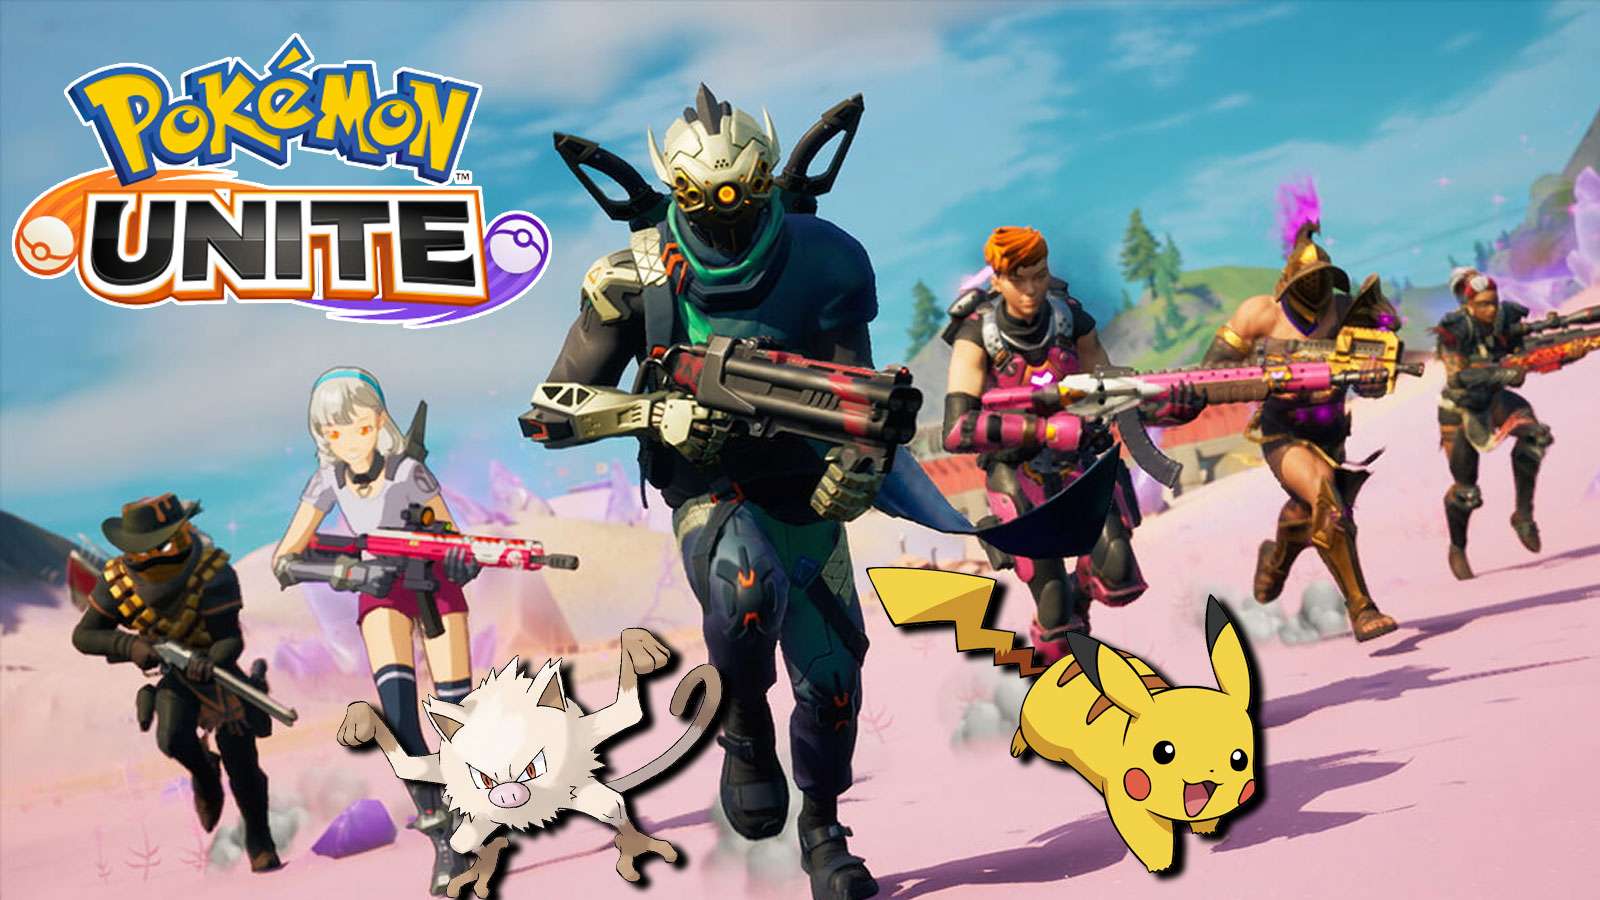 Screenshot of Fortnite with Pokemon characters.